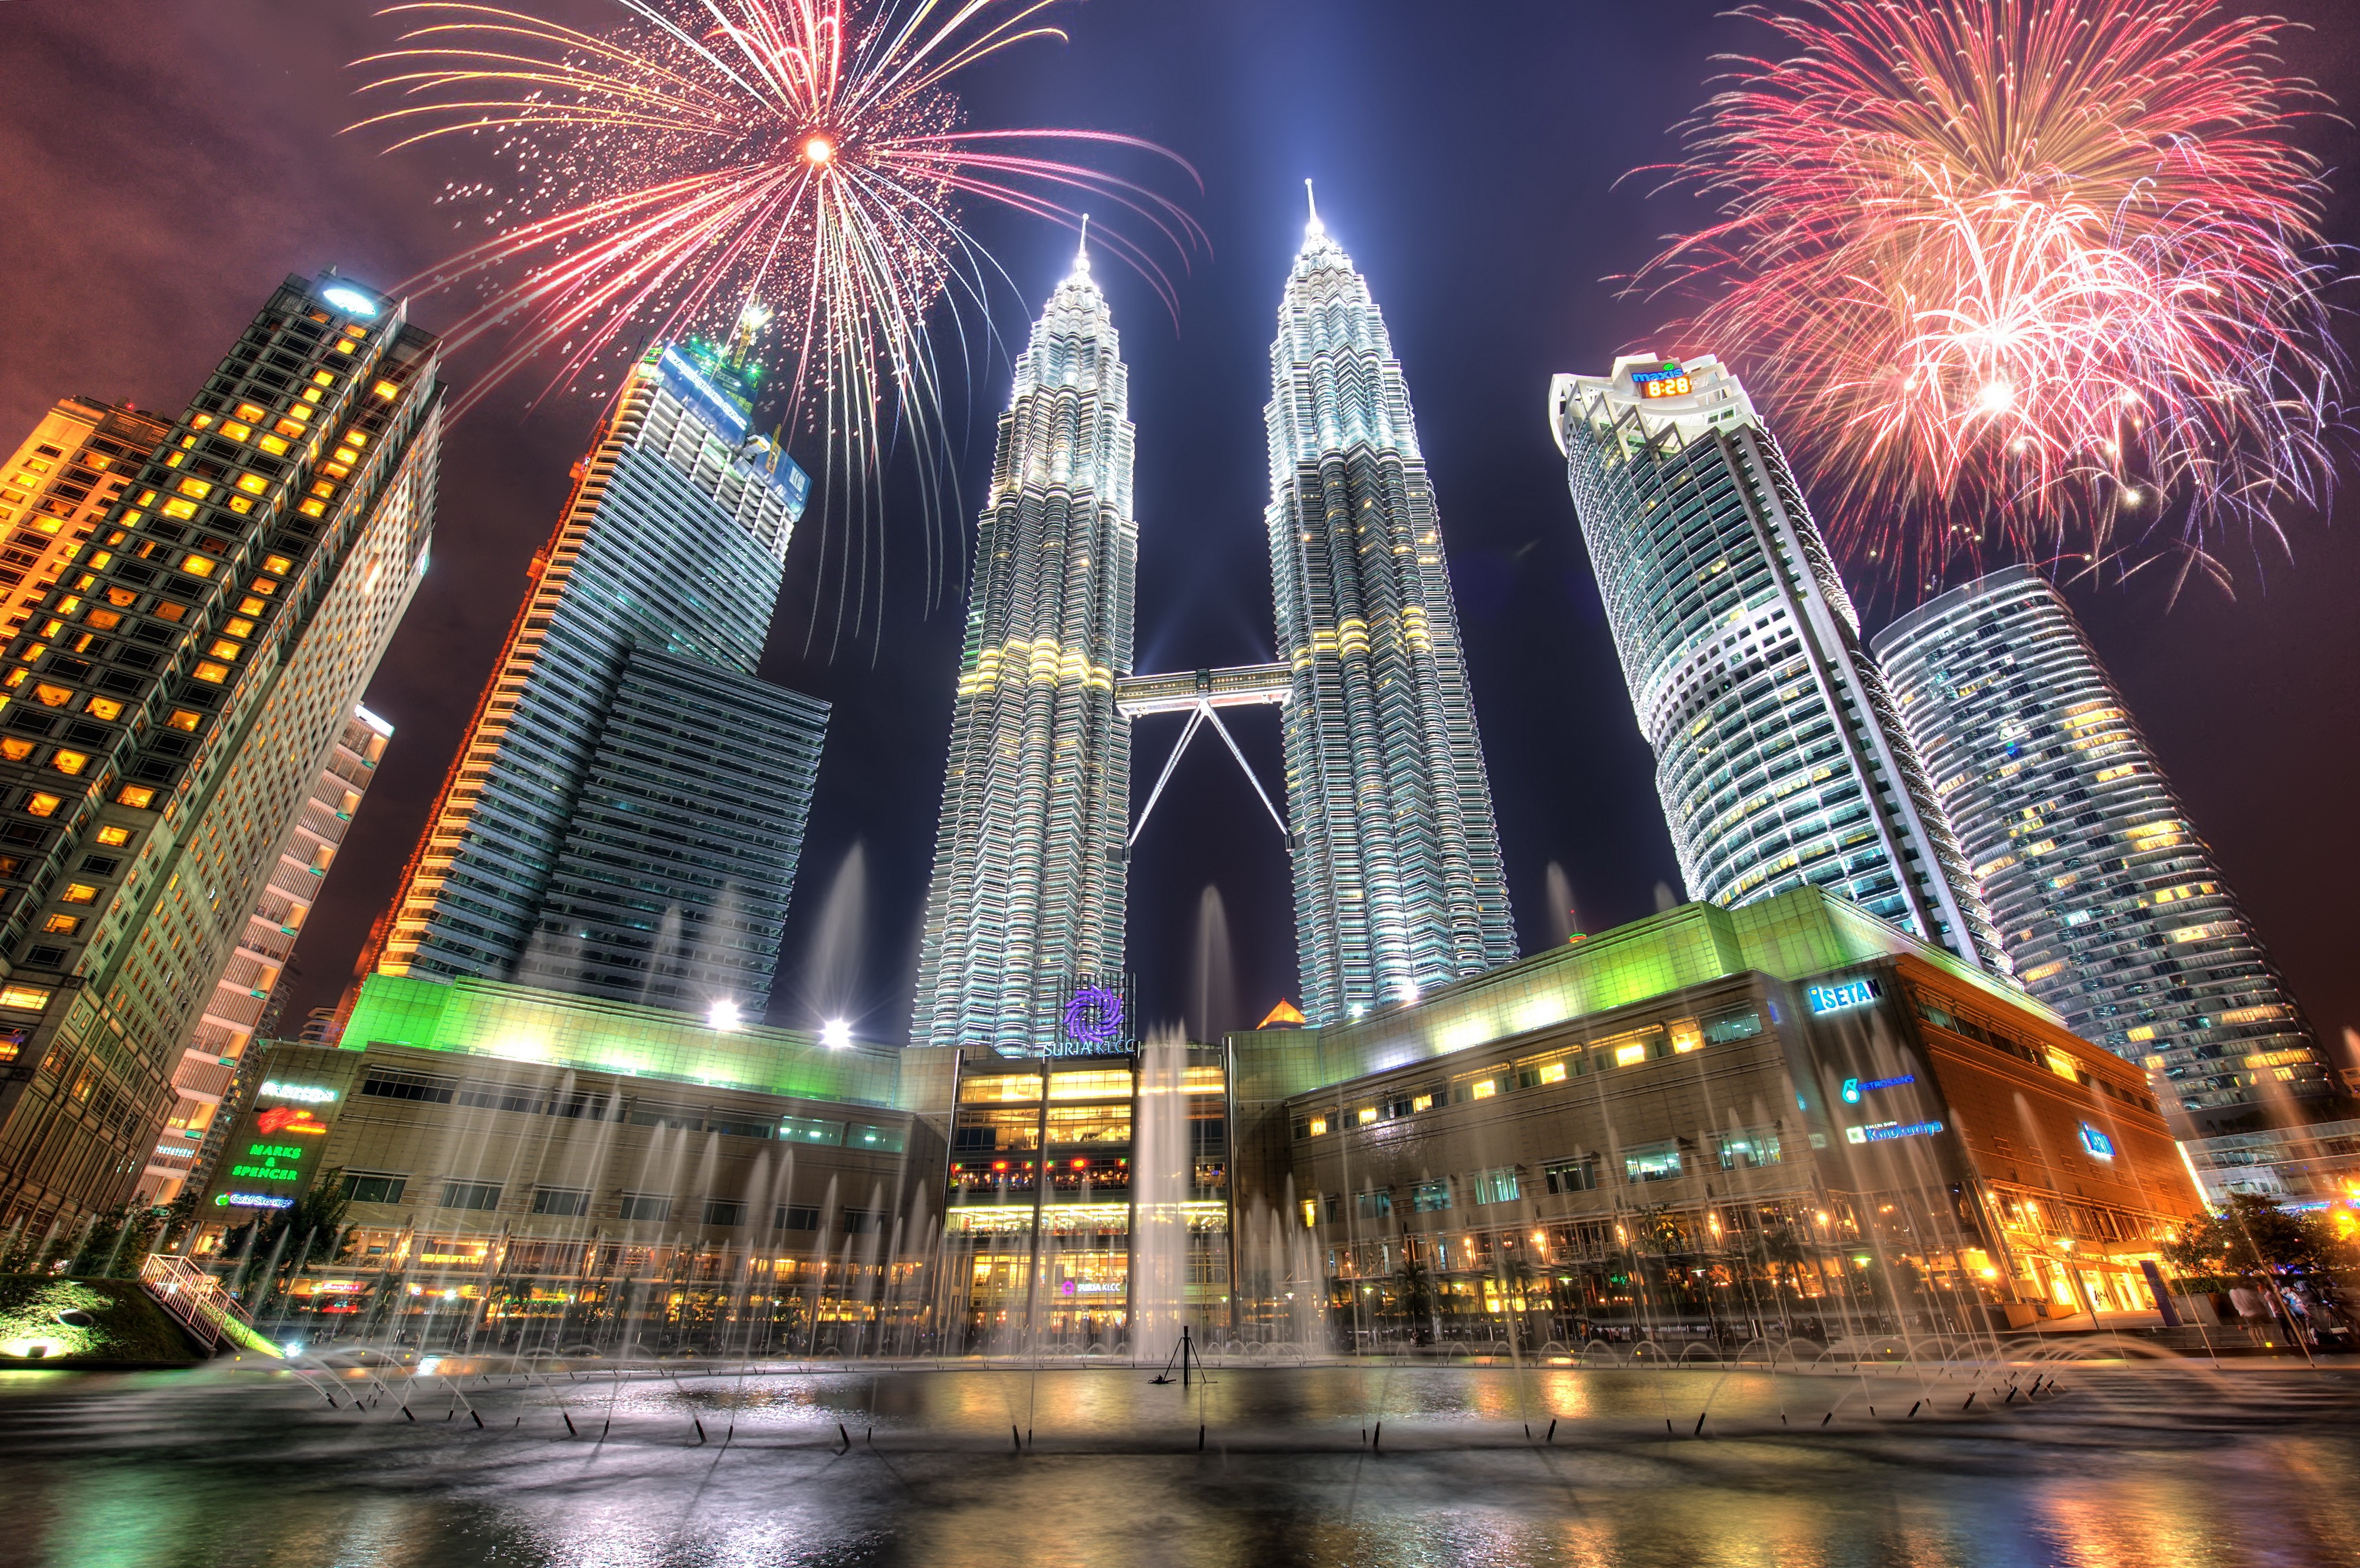 General 4000x2658 Petronas Towers Malaysia cityscape fireworks Asia skyscraper city lights landmark Kuala Lumpur building water night sky fountain